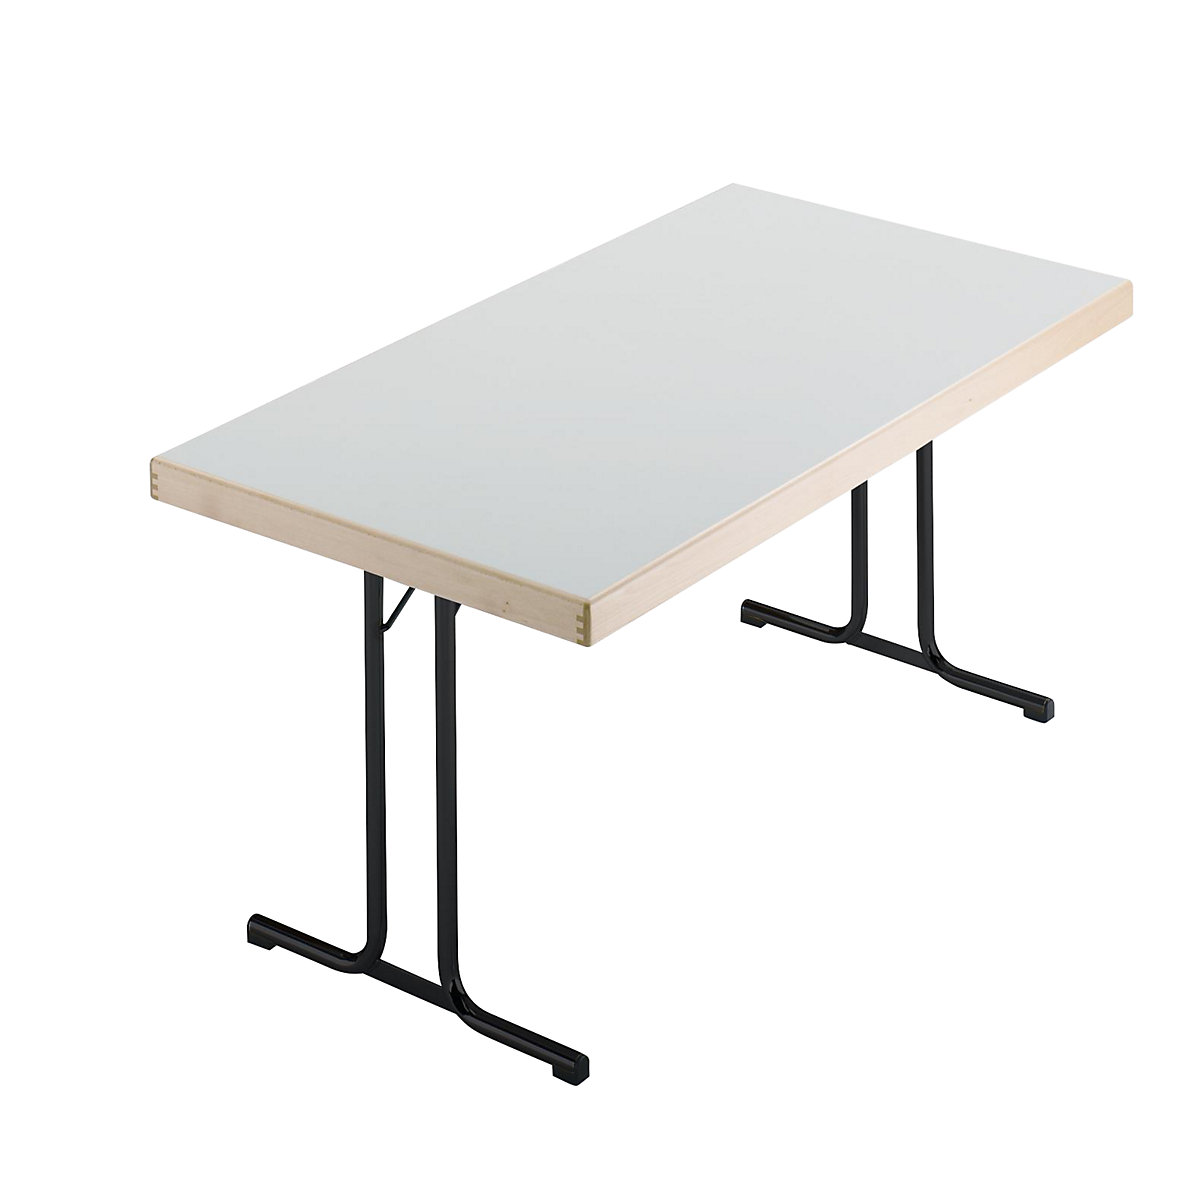 Sklopný stůl, podstavec s dvojitou T-nohou, 1200 x 800 mm, podstavec antracitový, deska svetle šedá-6